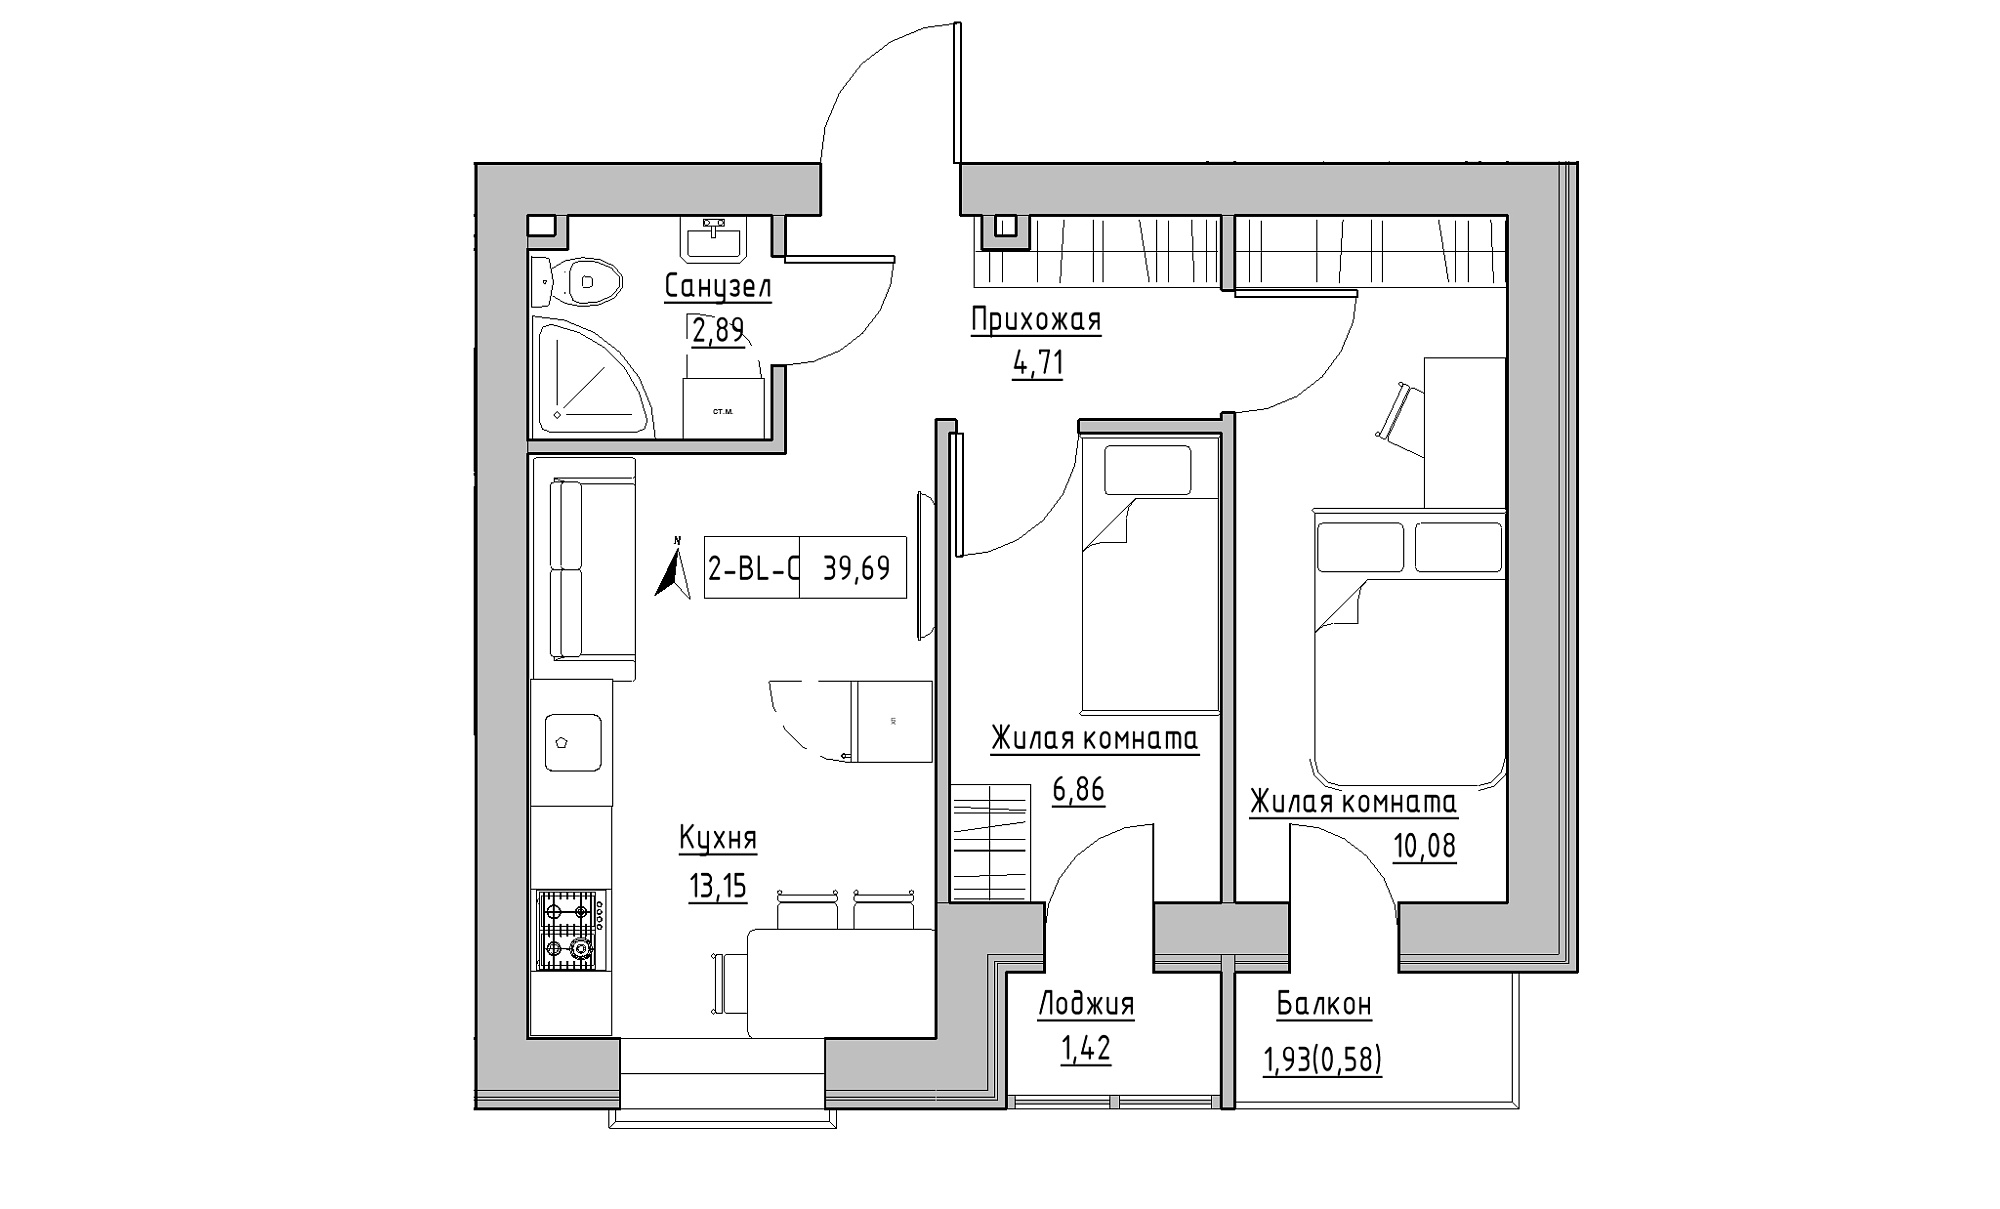 Planning 2-rm flats area 39.69m2, KS-016-04/0005.